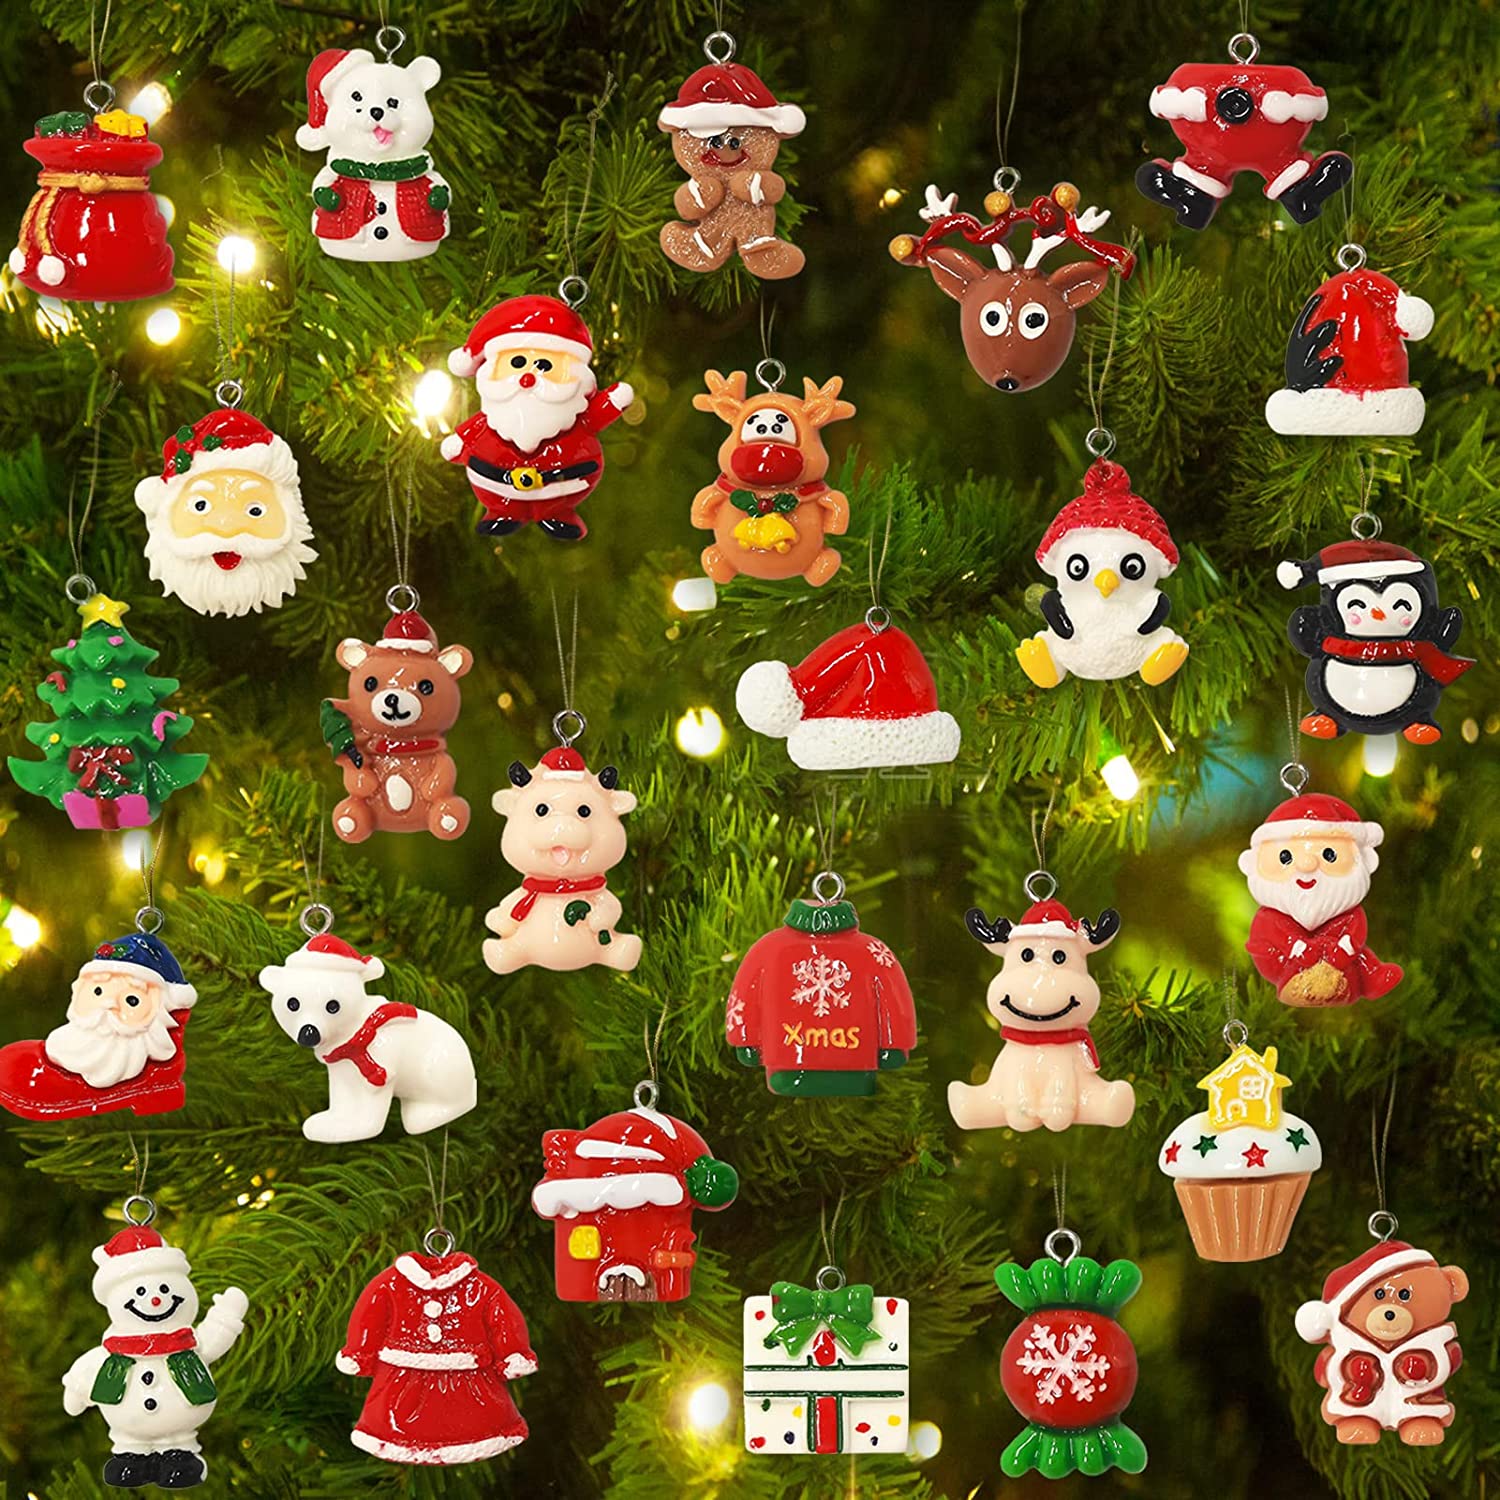 GuassLee 28pcs Mini Christmas Ornaments Set for Christmas Decorations Craft Supplies Tiny Santa Claus Snowman Ornaments - image 1 of 9